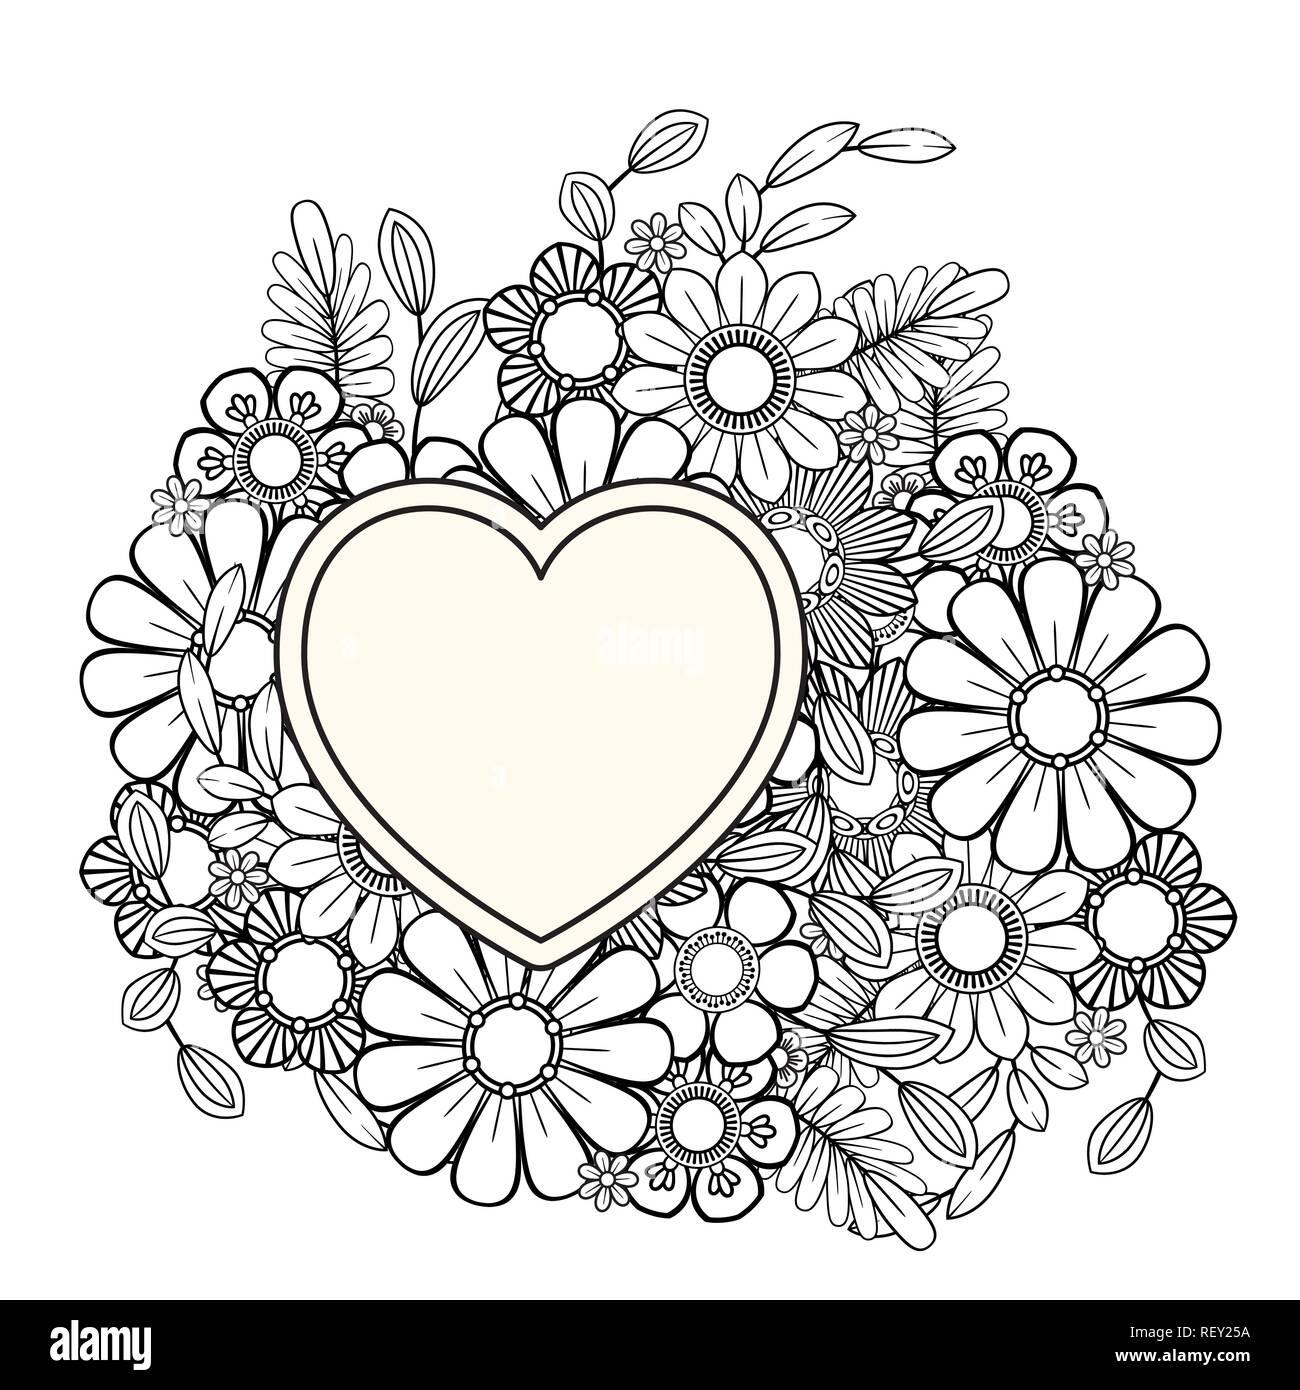 Descarga Vector De Diseño De Portada De Libro Para Colorear De San Valentín